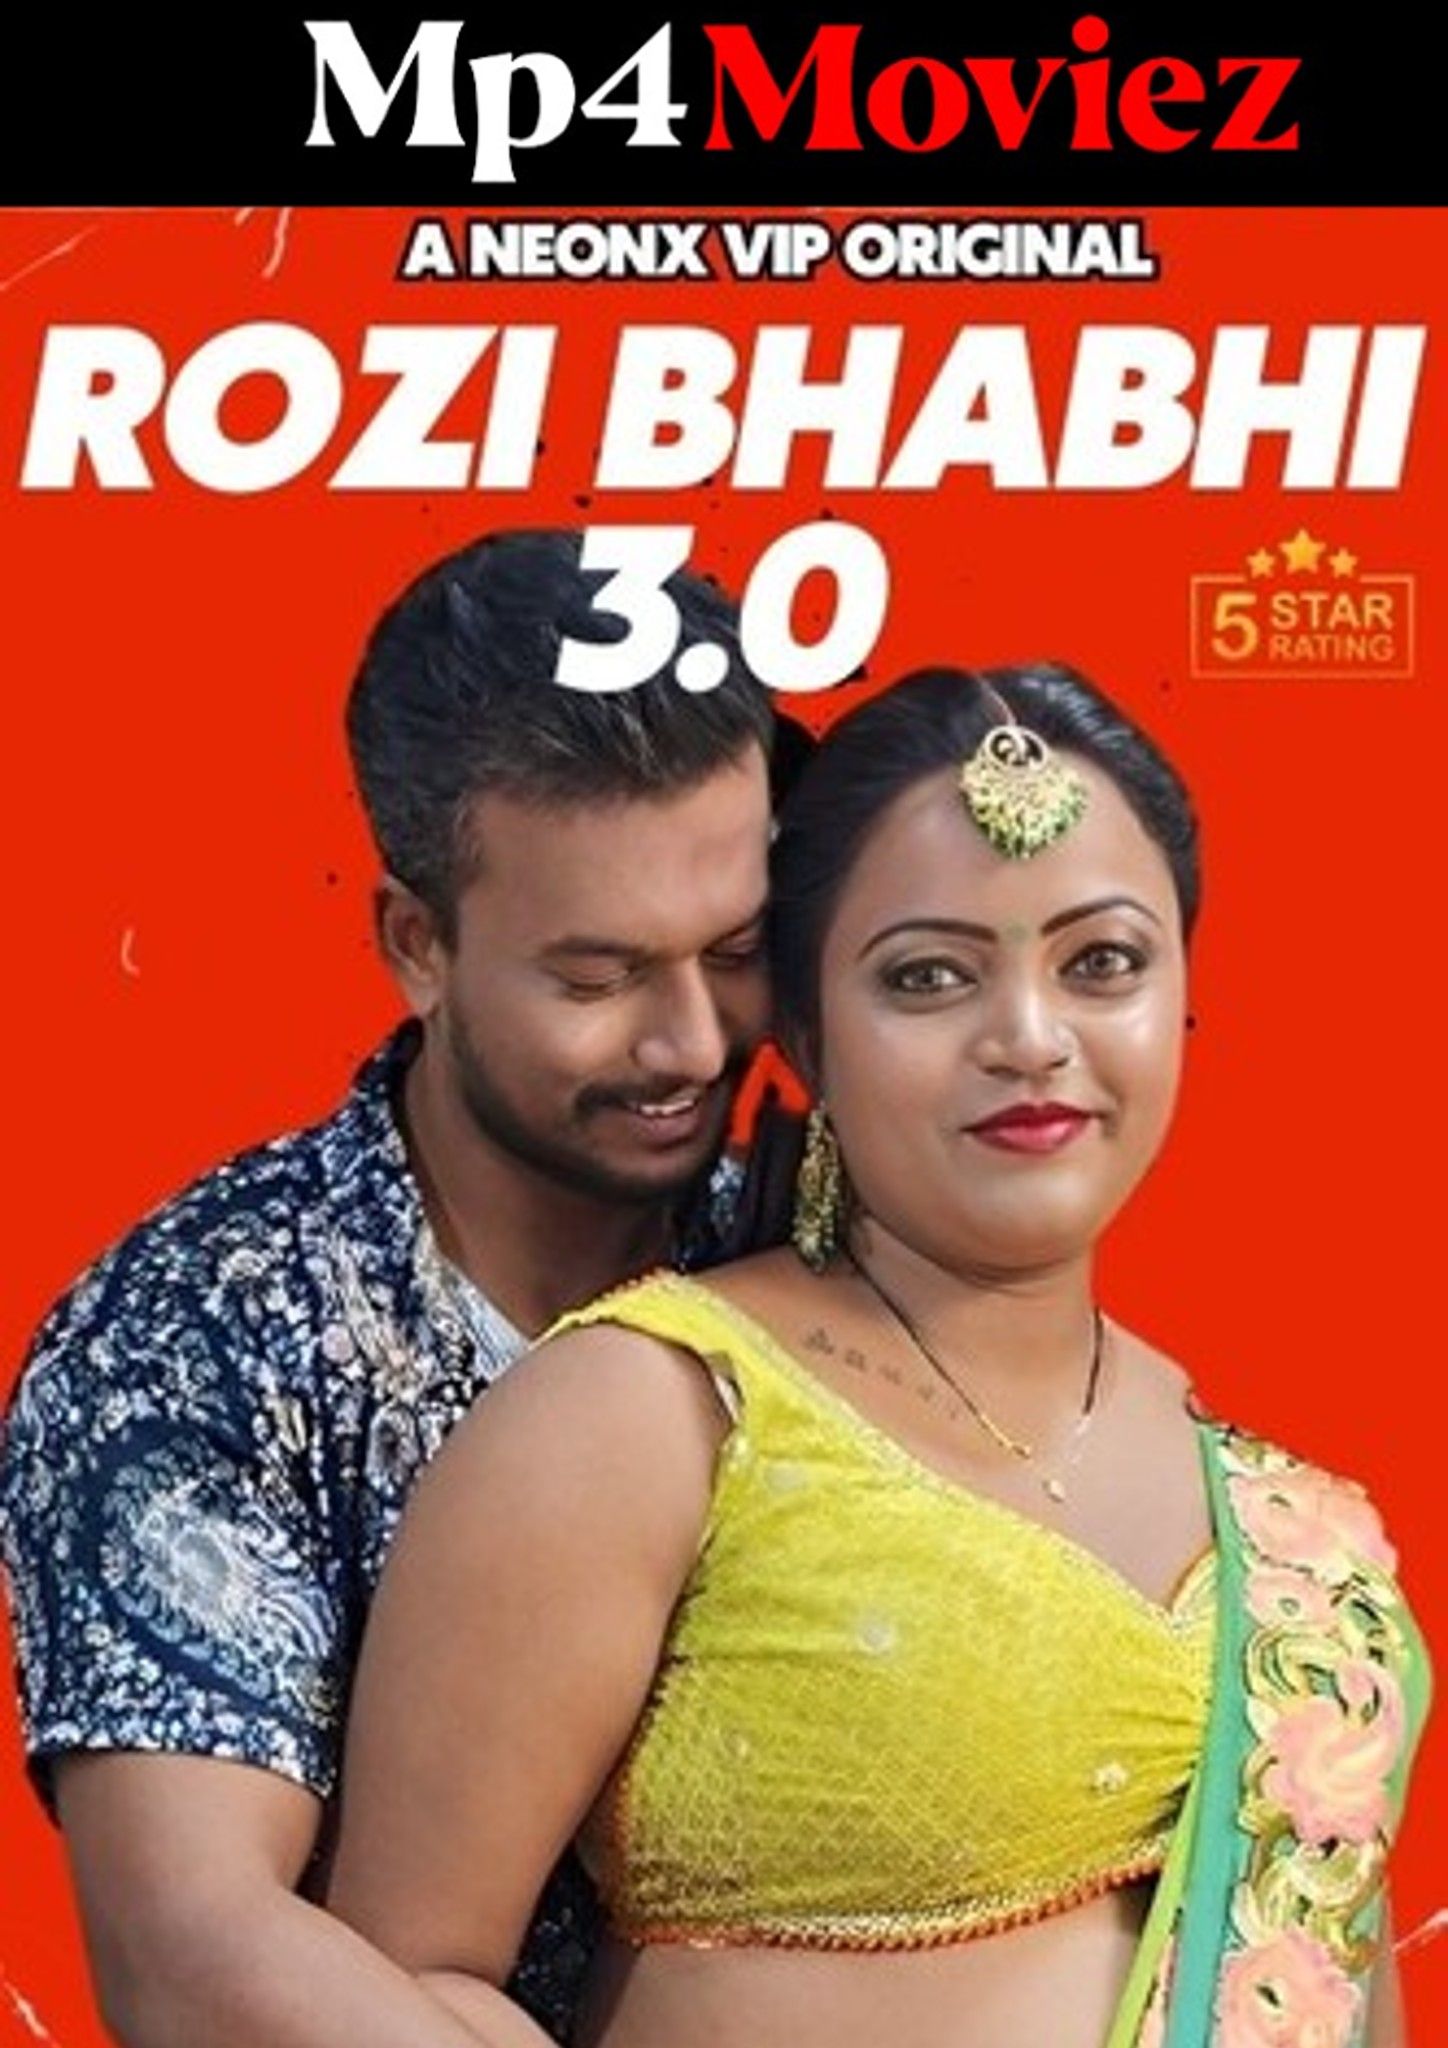 Rozi Bhabhi 3.0 (2023) Hindi NeonX Short Film download full movie